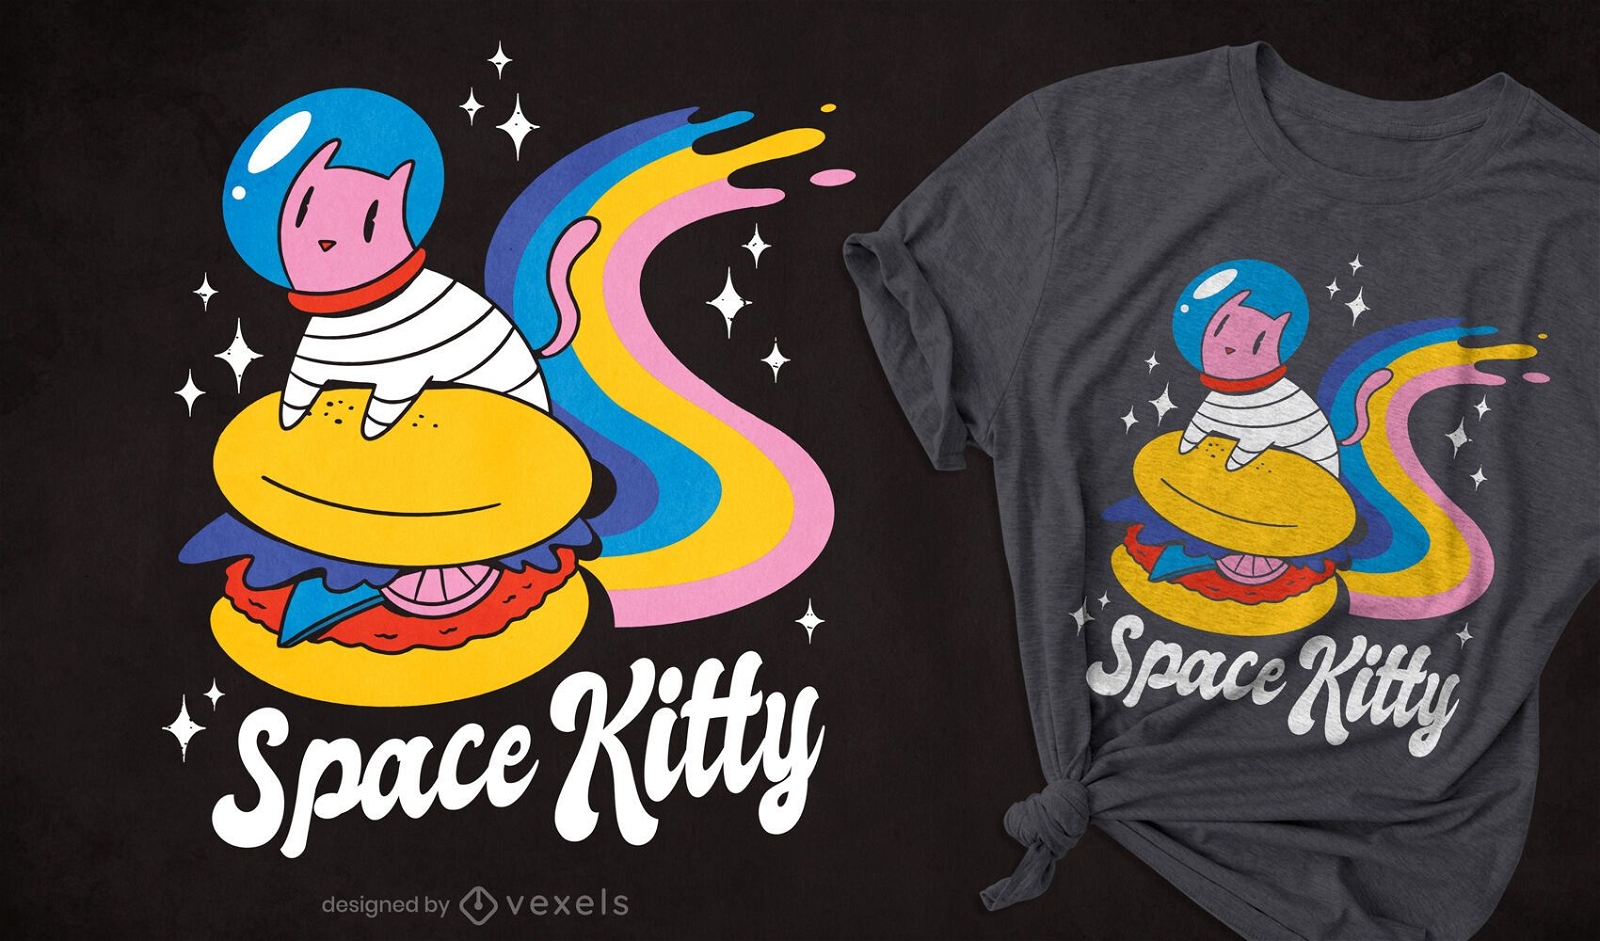 Space kitty t-shirt design